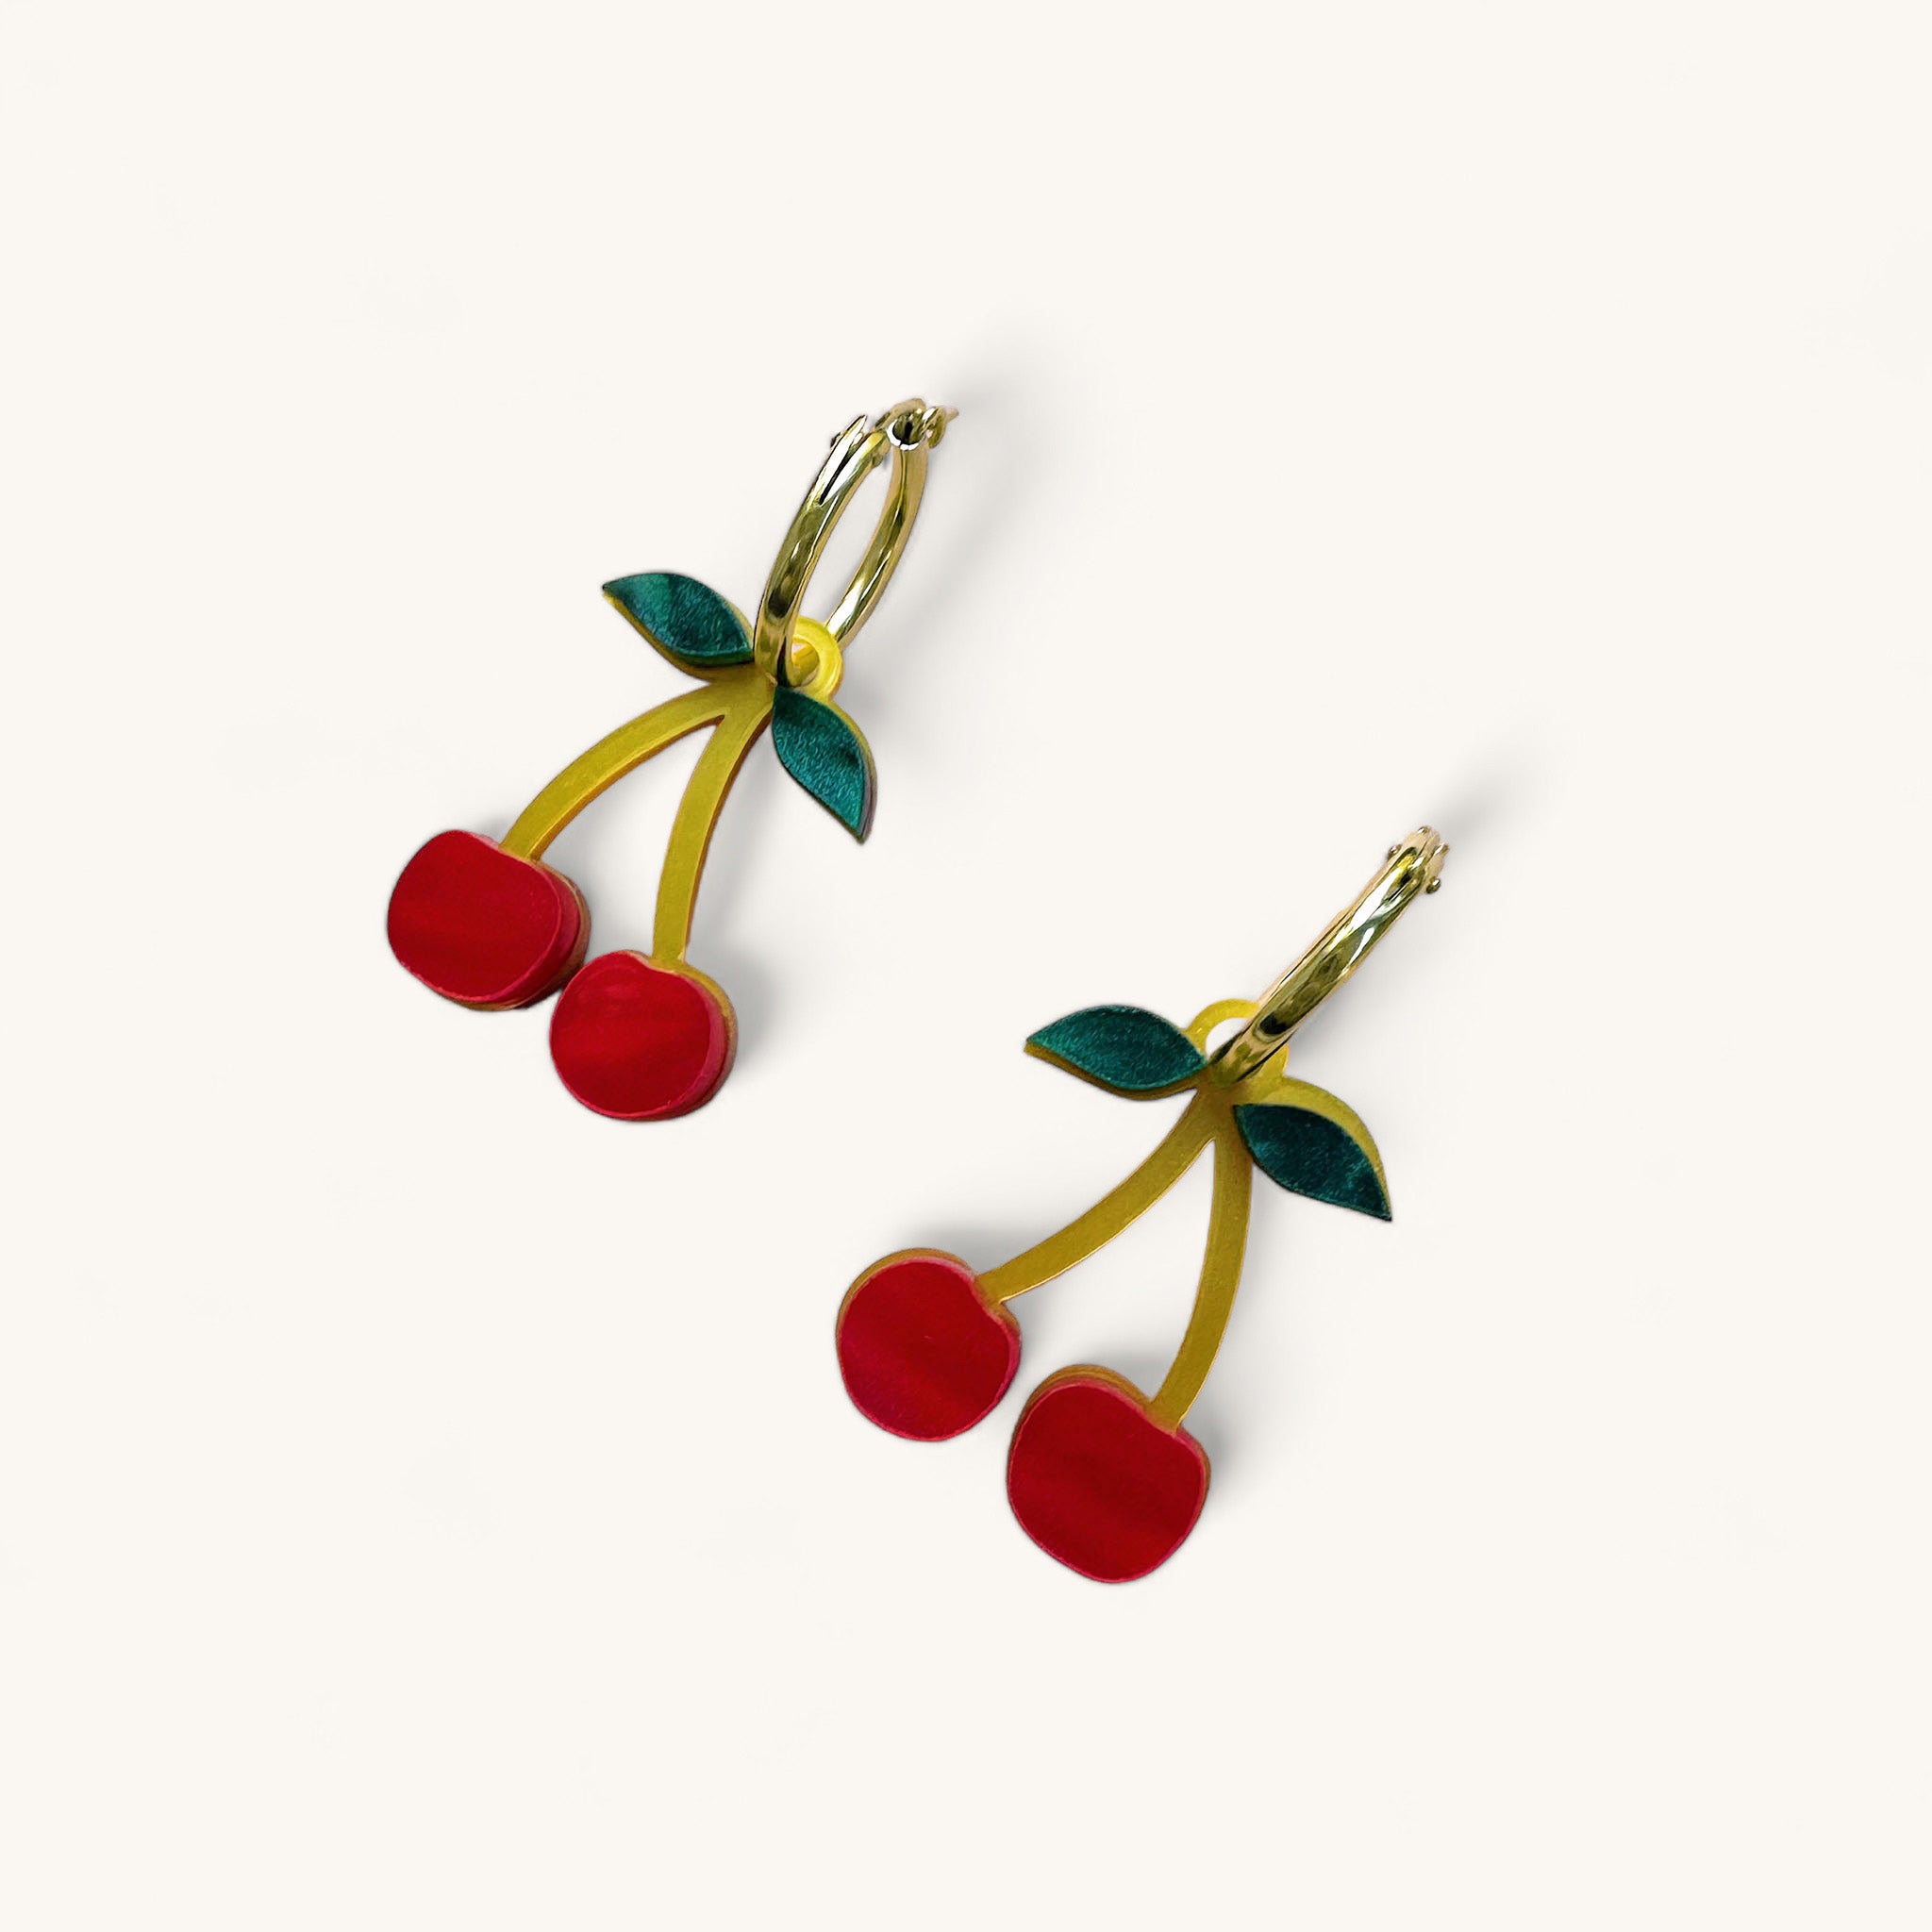 Jennifer Loiselle Cherry Charm Fruit Earrings with gold filled hoop